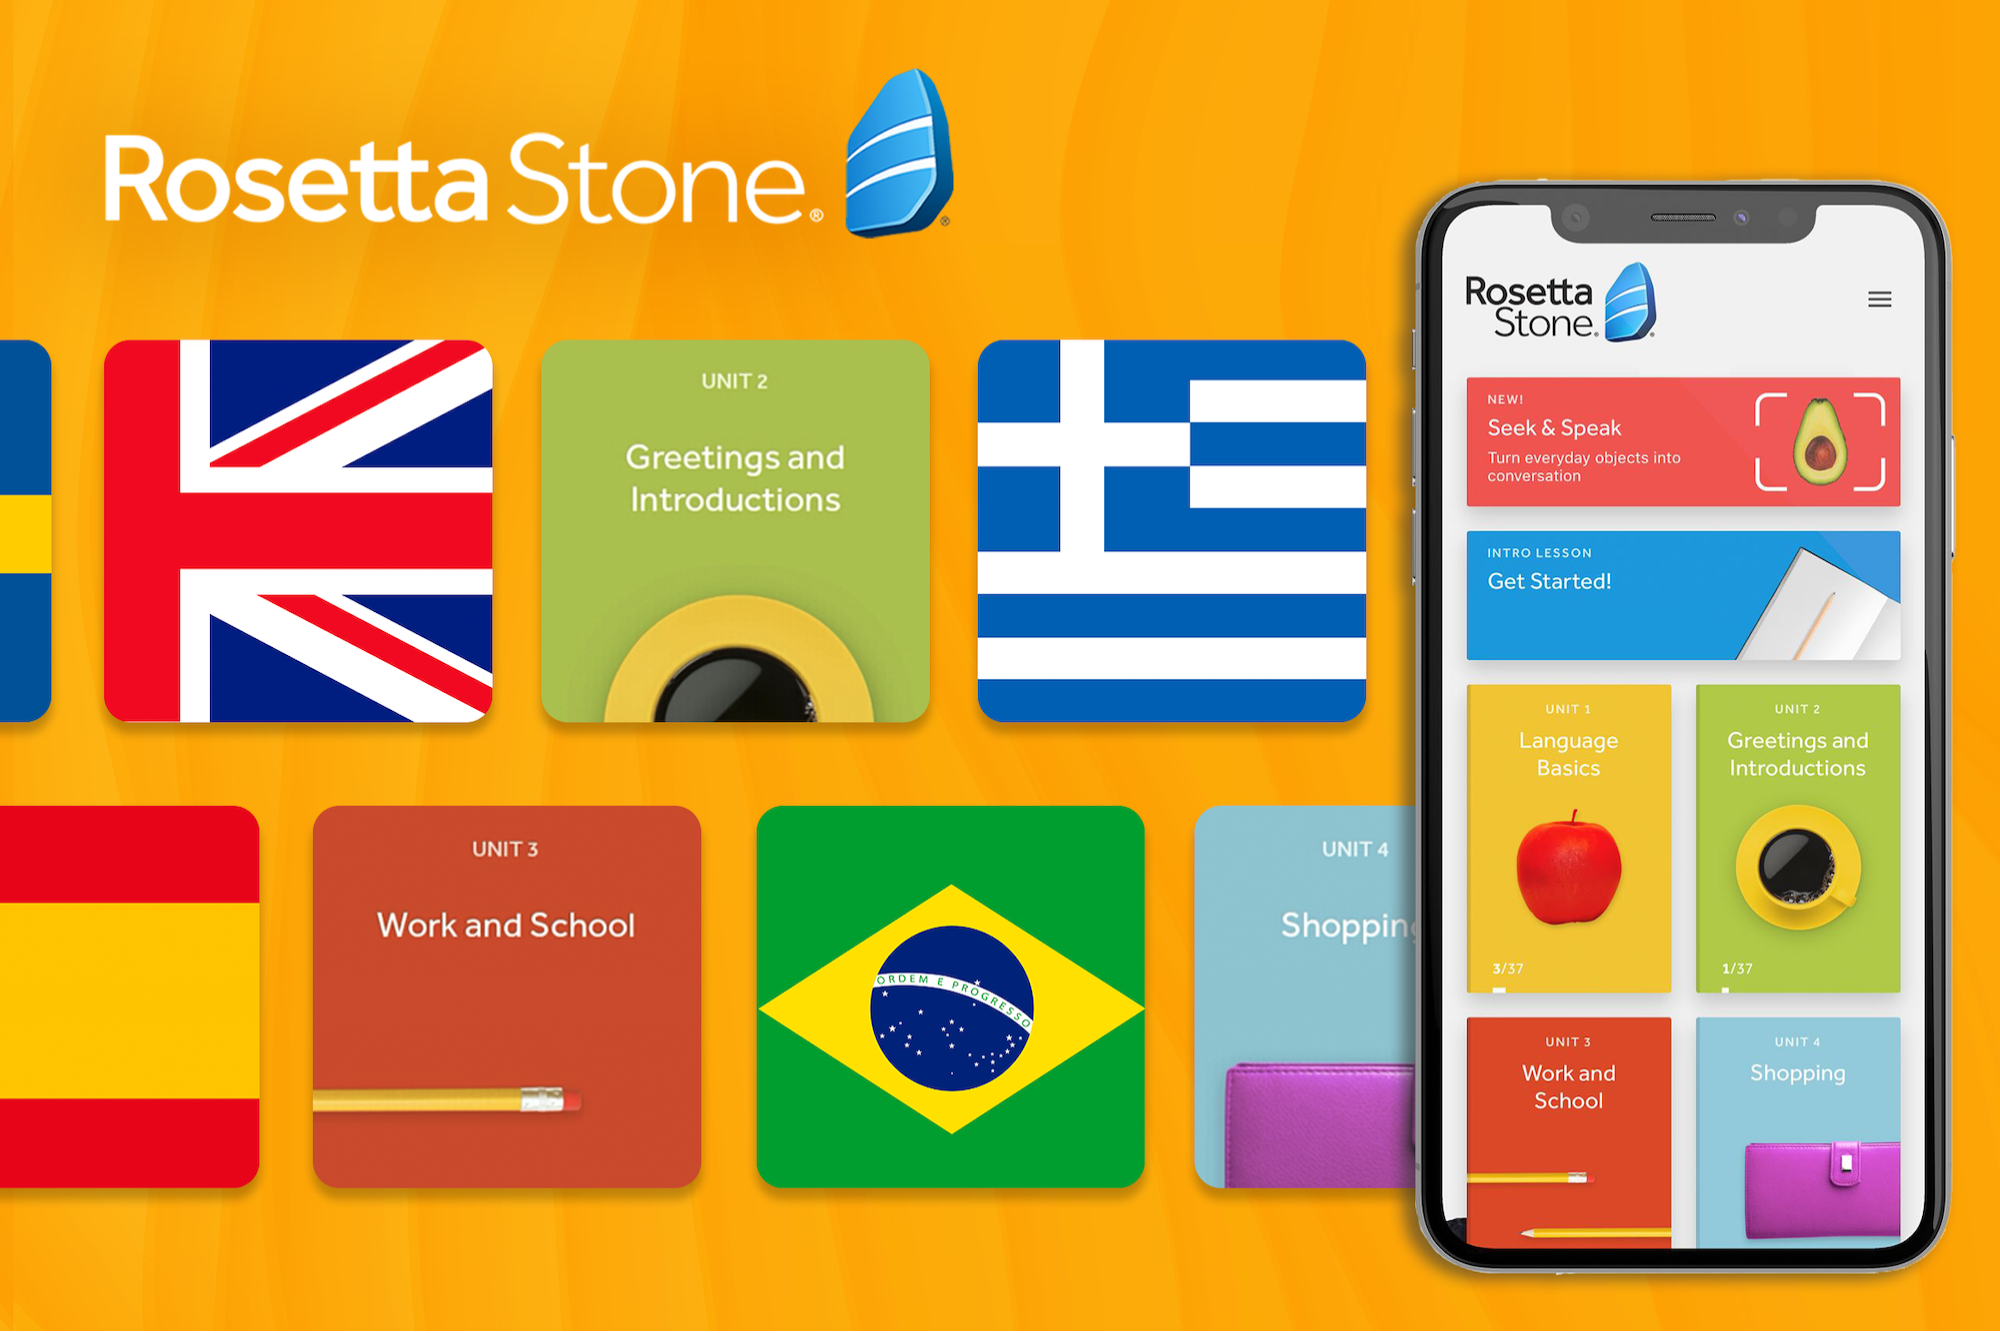 Expand International Communication with Lifetime Access to Rosetta Stone Language Learning